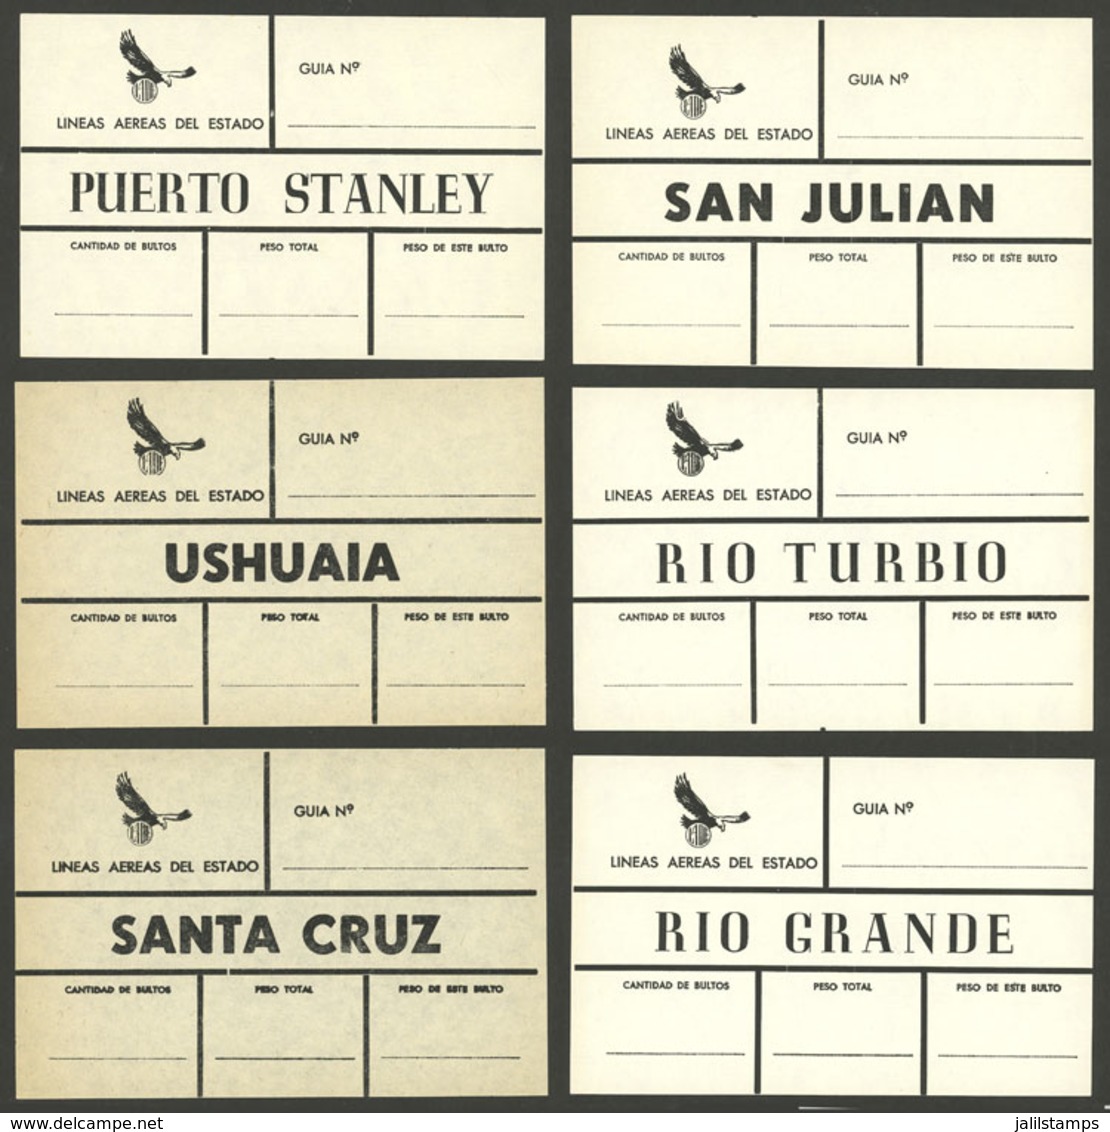 ARGENTINA: 31 Mail Report Forms (circa 1960) Of LADE Airline (Líneas Aéreas Del Estado) For Air Parcel Post To PUERTO ST - Luftpost